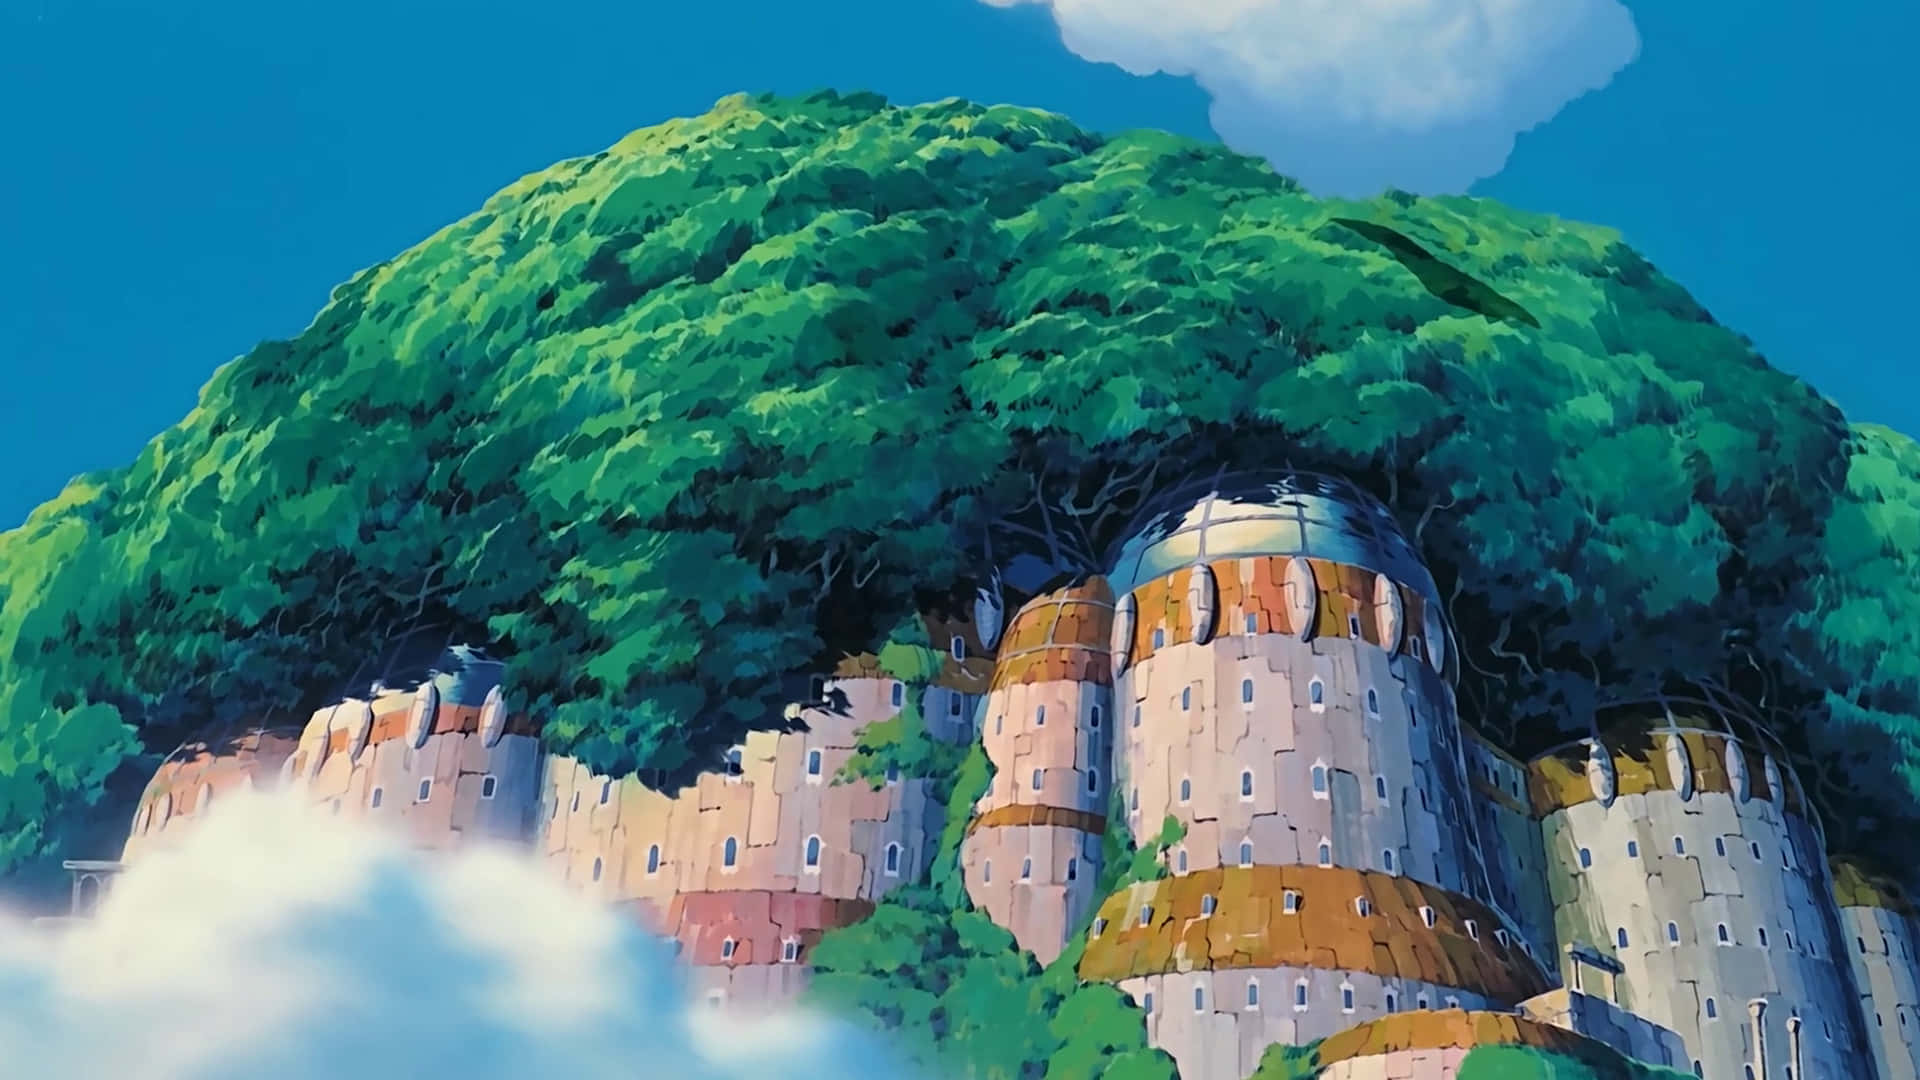 A Vibrant Scene from Studio Ghibli's Magical World Wallpaper